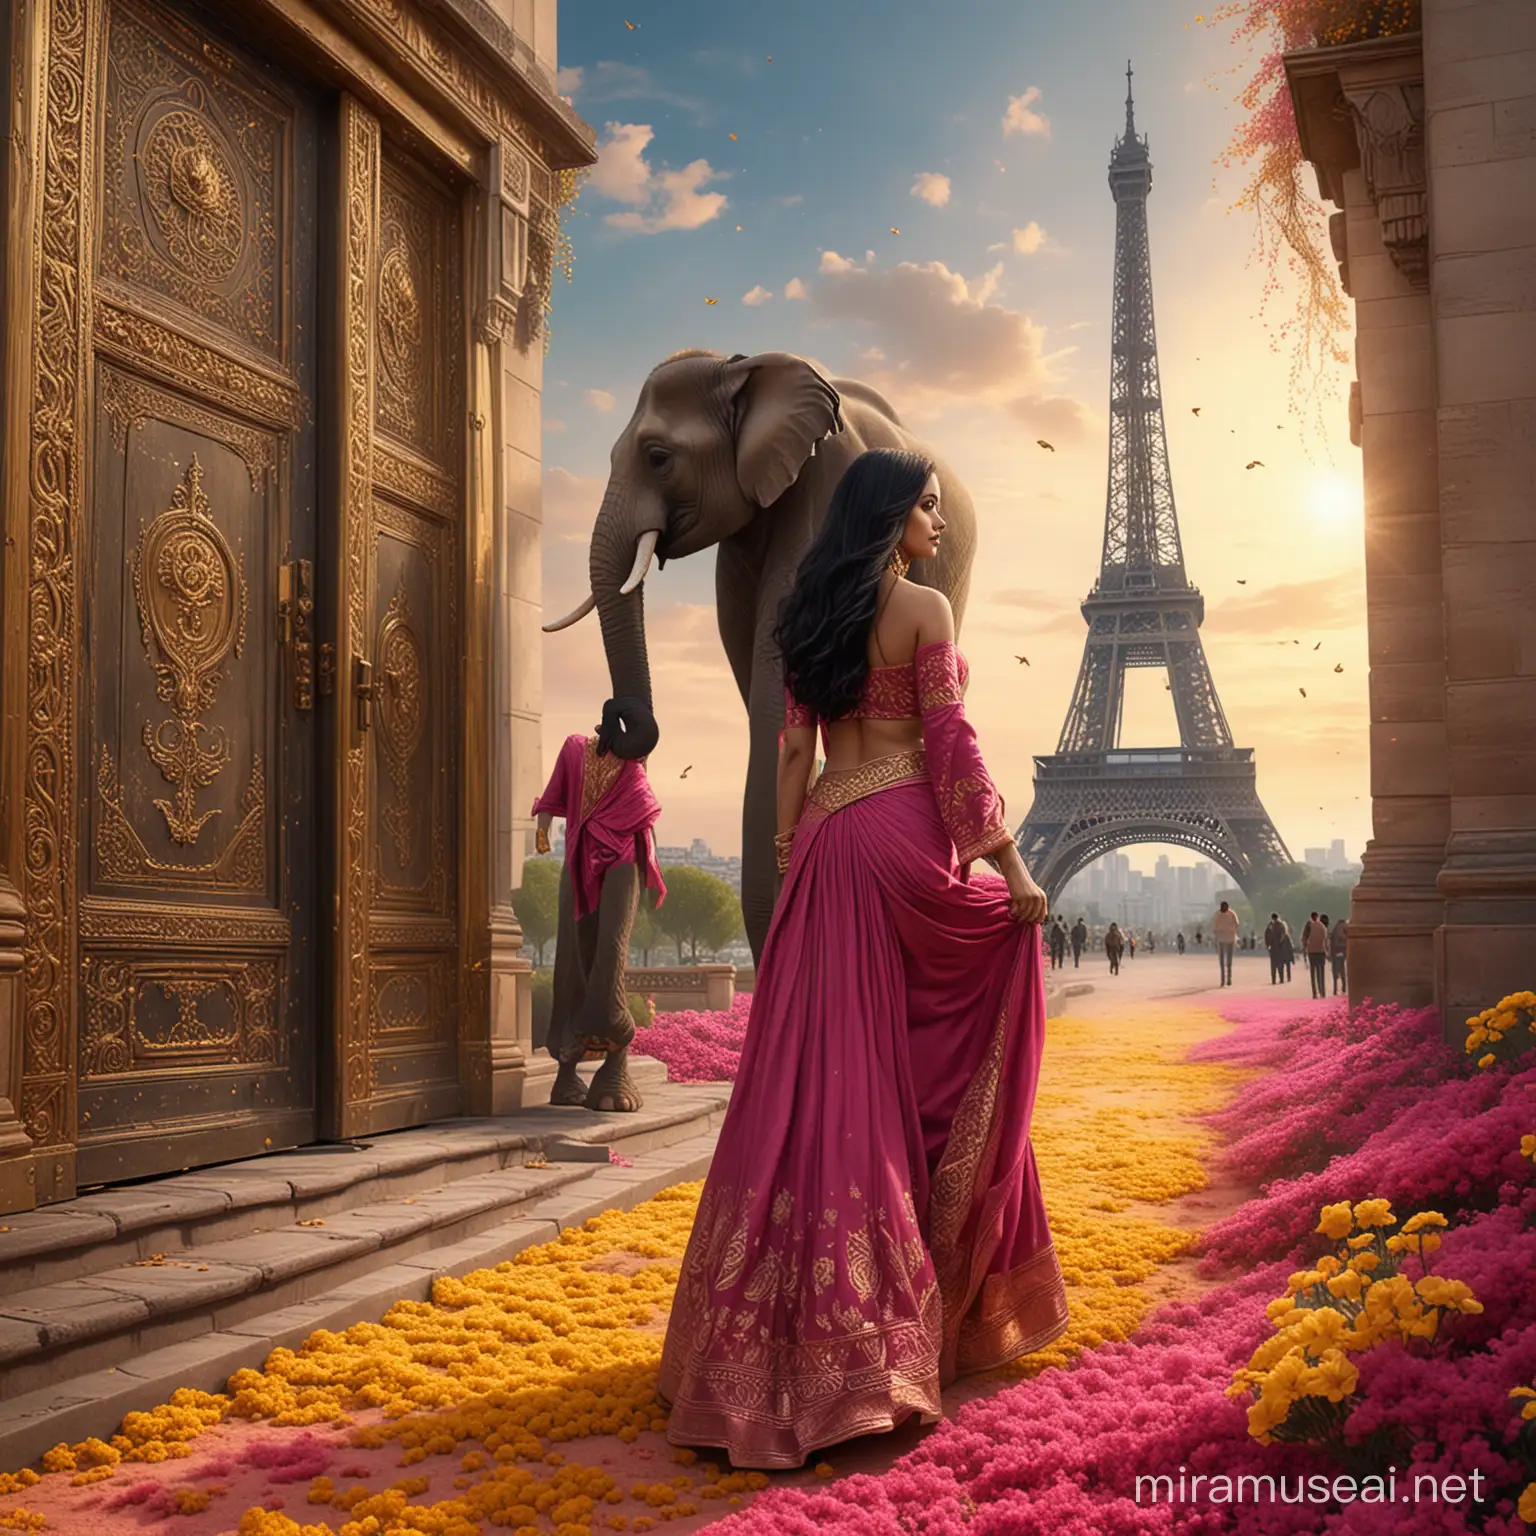 Elegant Woman Walking through Golden Arabian Door amidst Floral Splendor